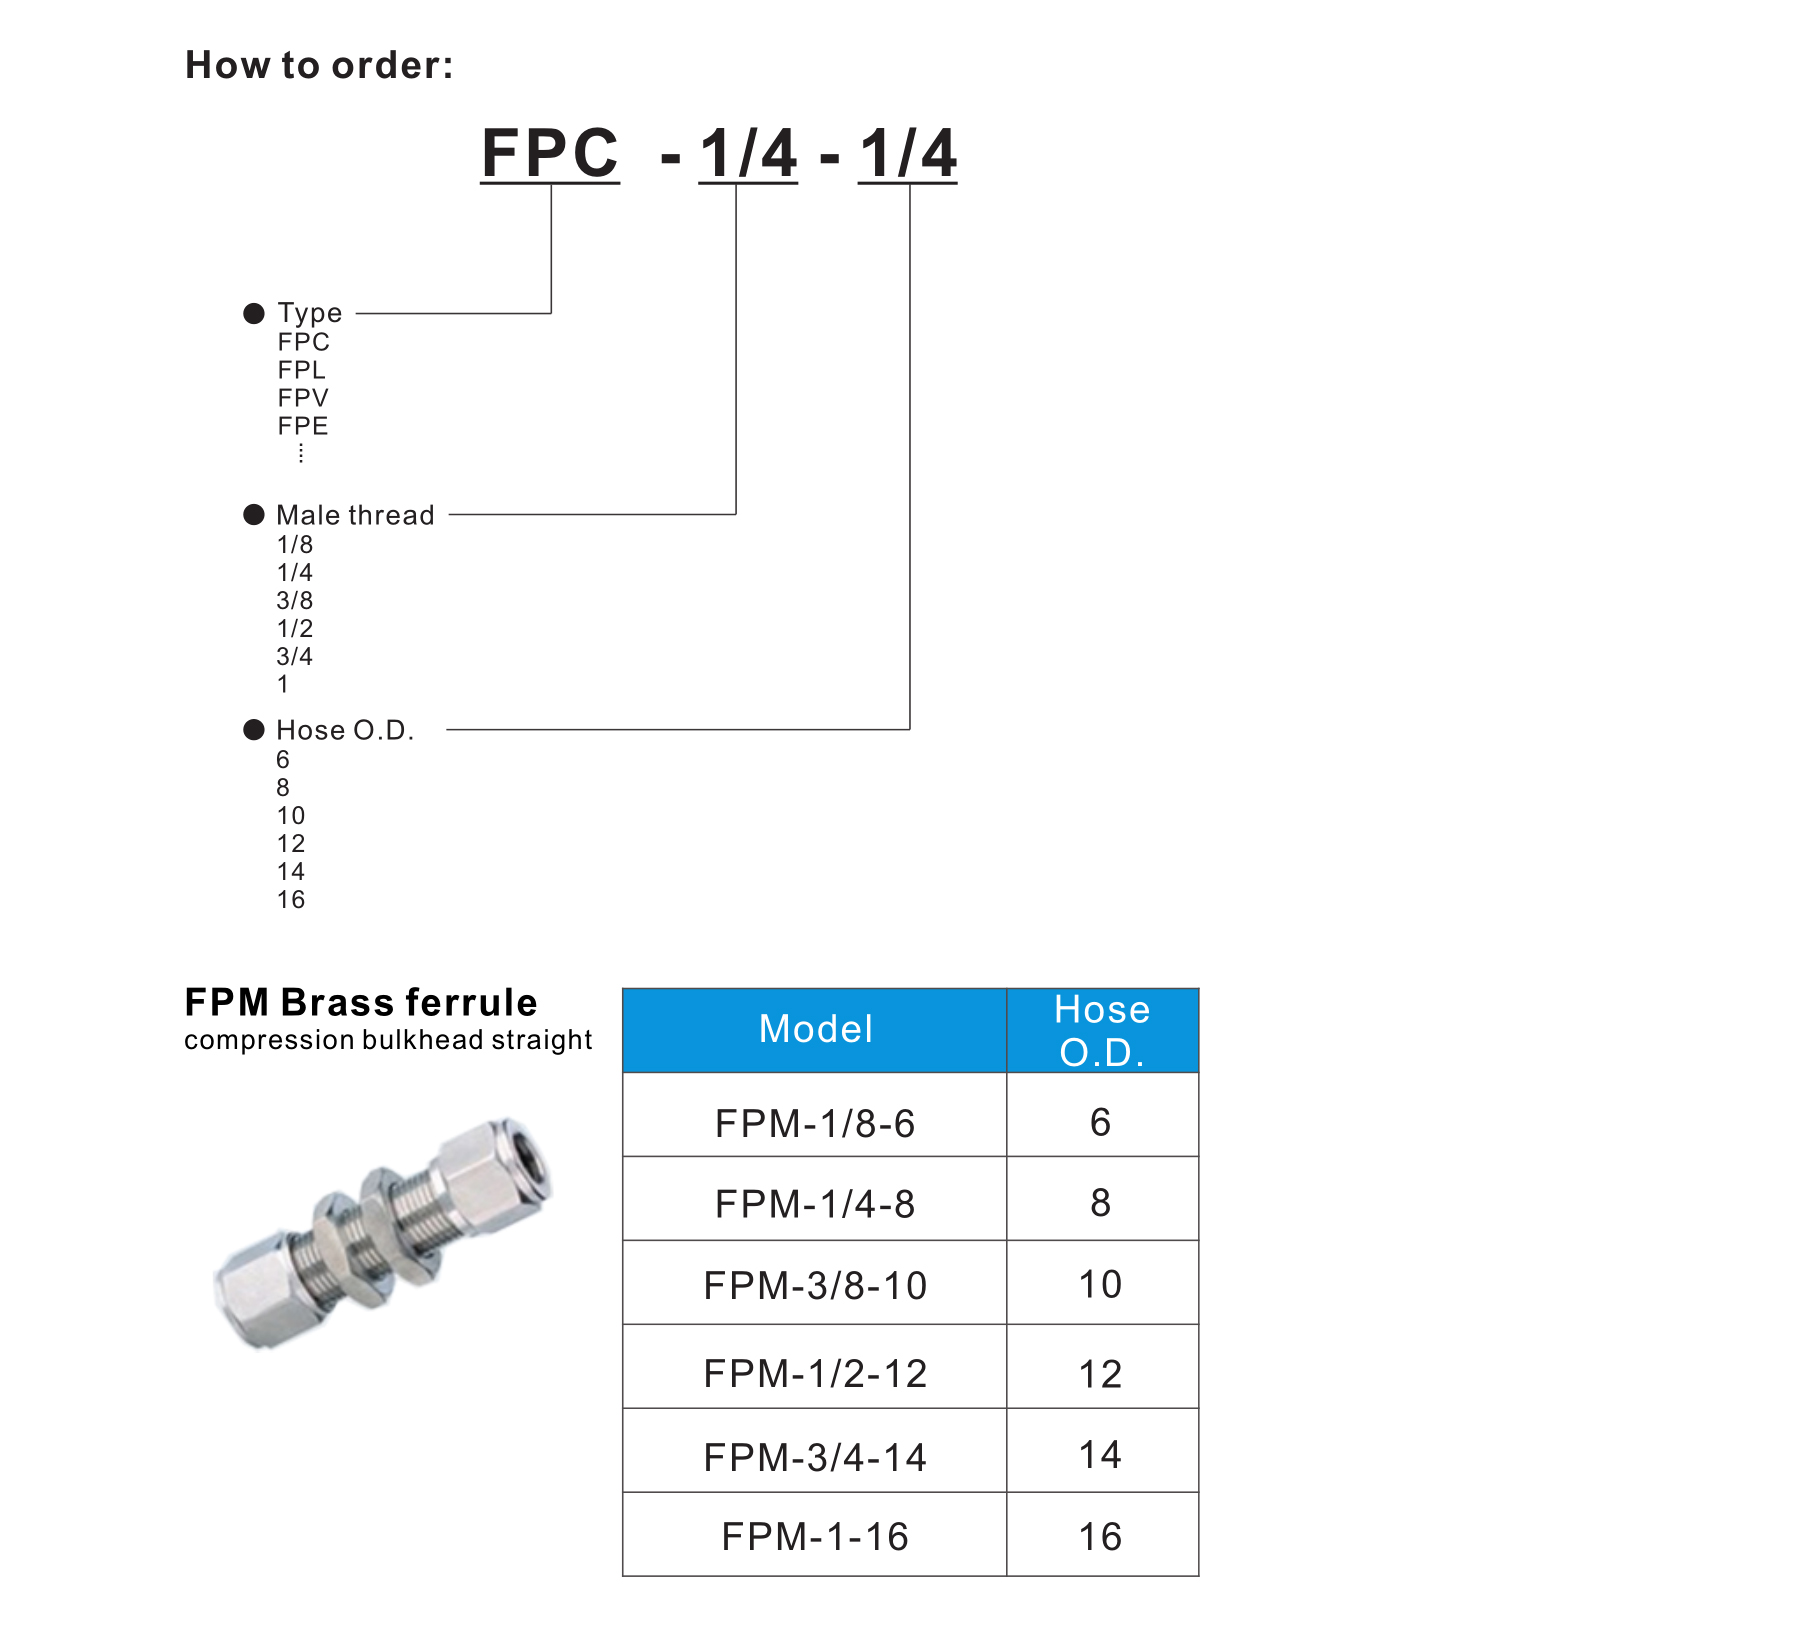 FPM Brass ferrule compression bulkhead straight